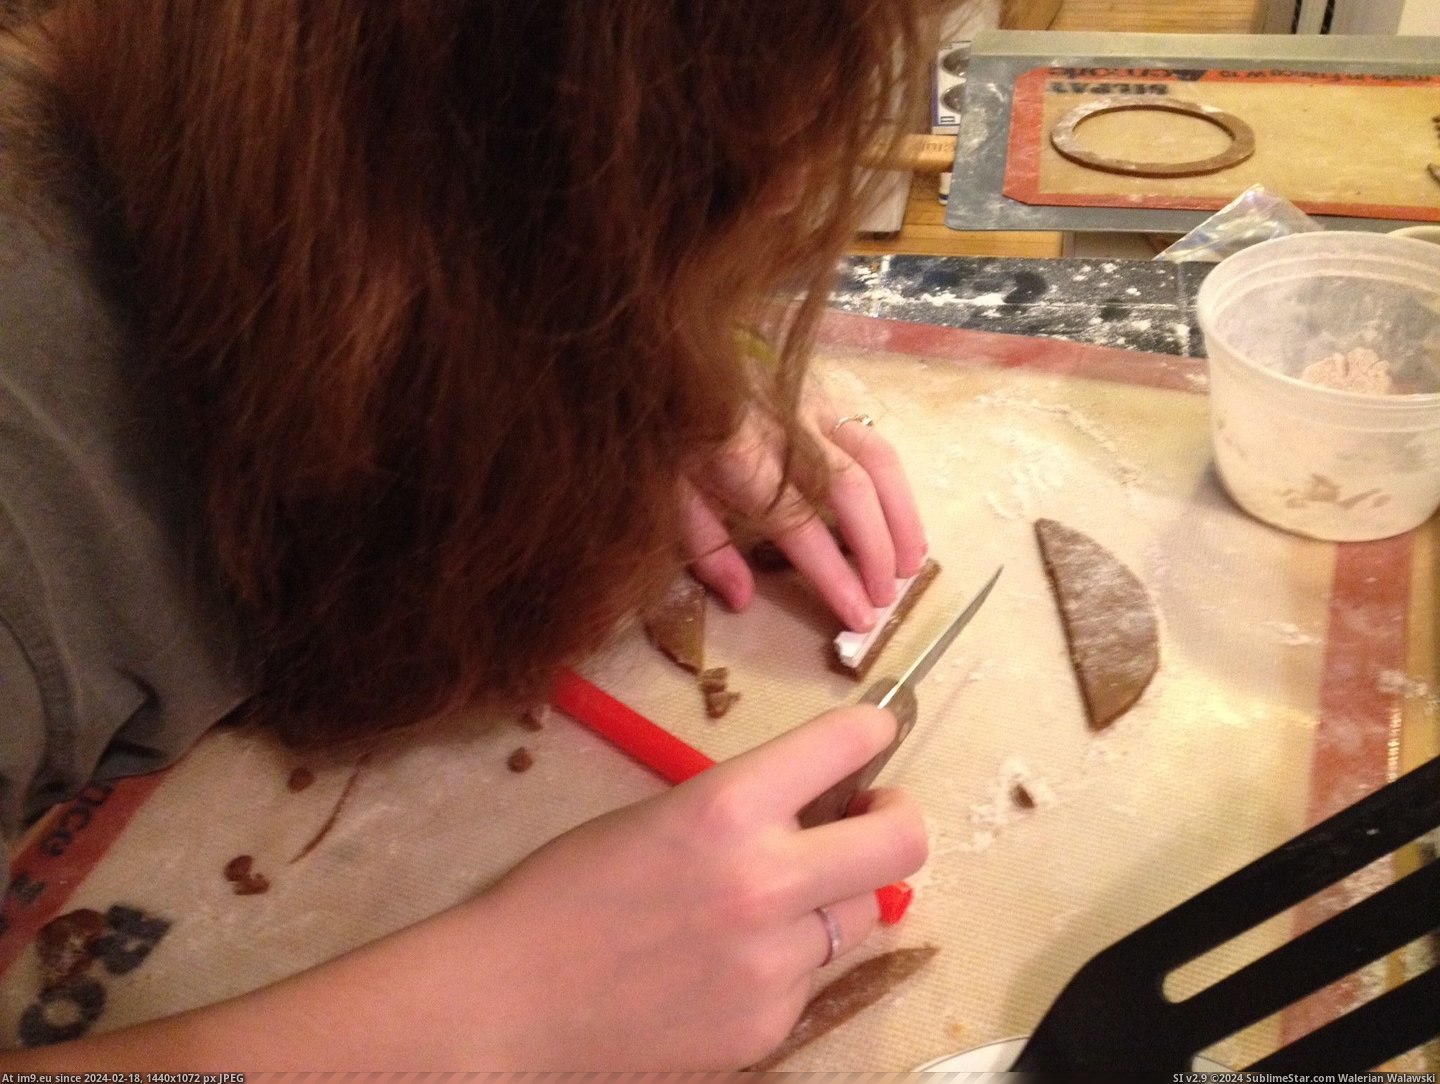 #Daughter #Tower #Pisa #Gingerbread #Leaning [Pics] My Daughter and I Made a Gingerbread Leaning Tower of Pisa 5 Pic. (Bild von album My r/PICS favs))